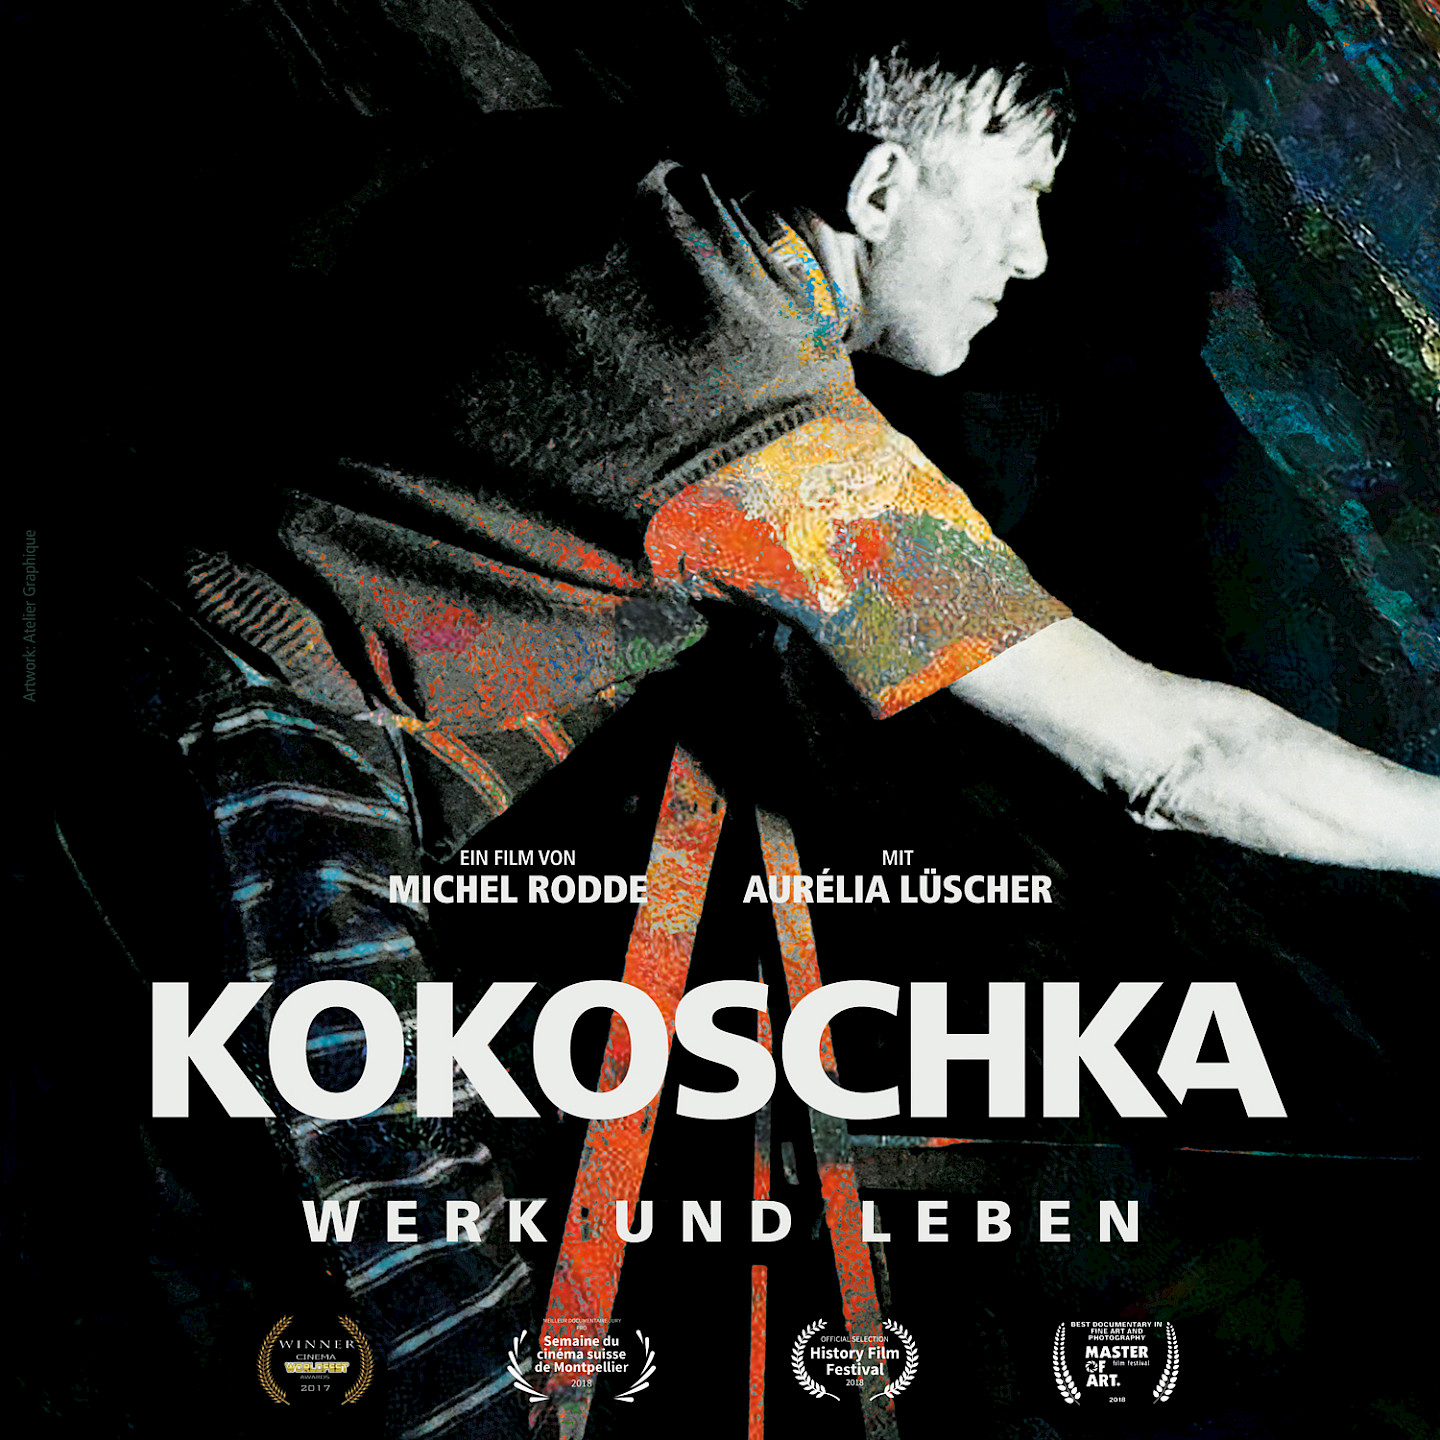 Filmpremiere Kokoschka